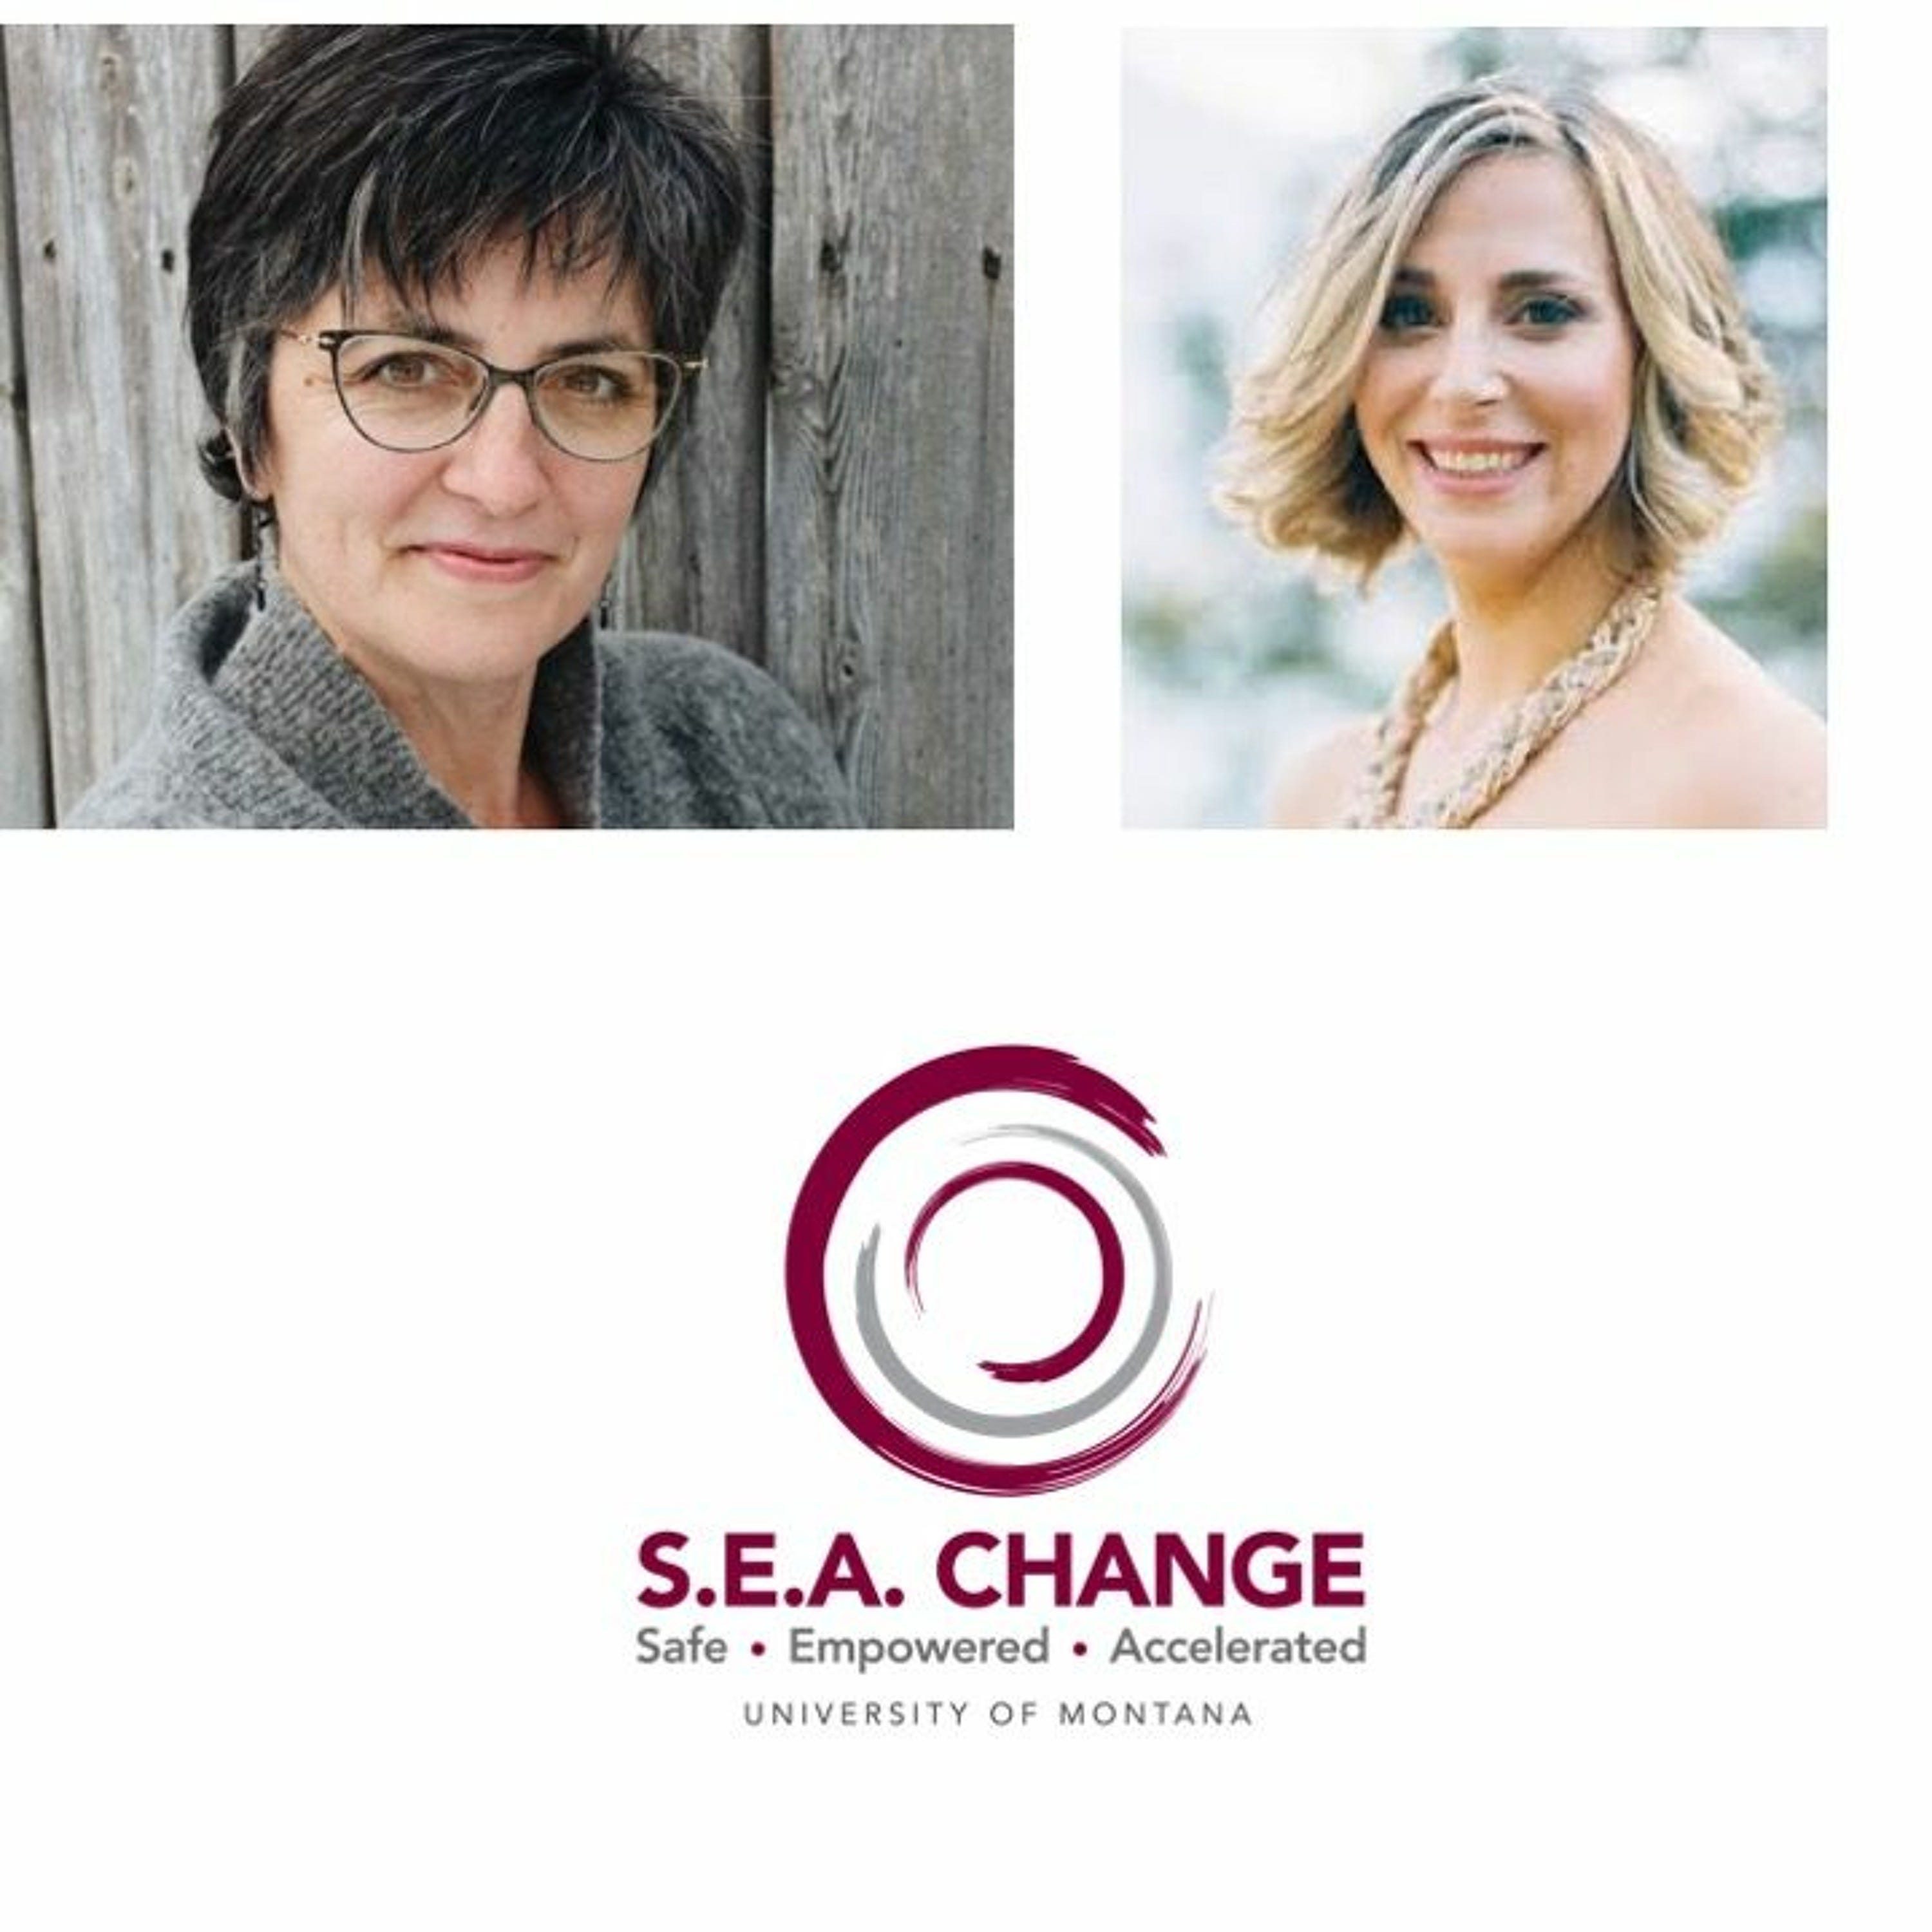 S.E.A. Change #2: Christine Littig & Morgan Slemberger